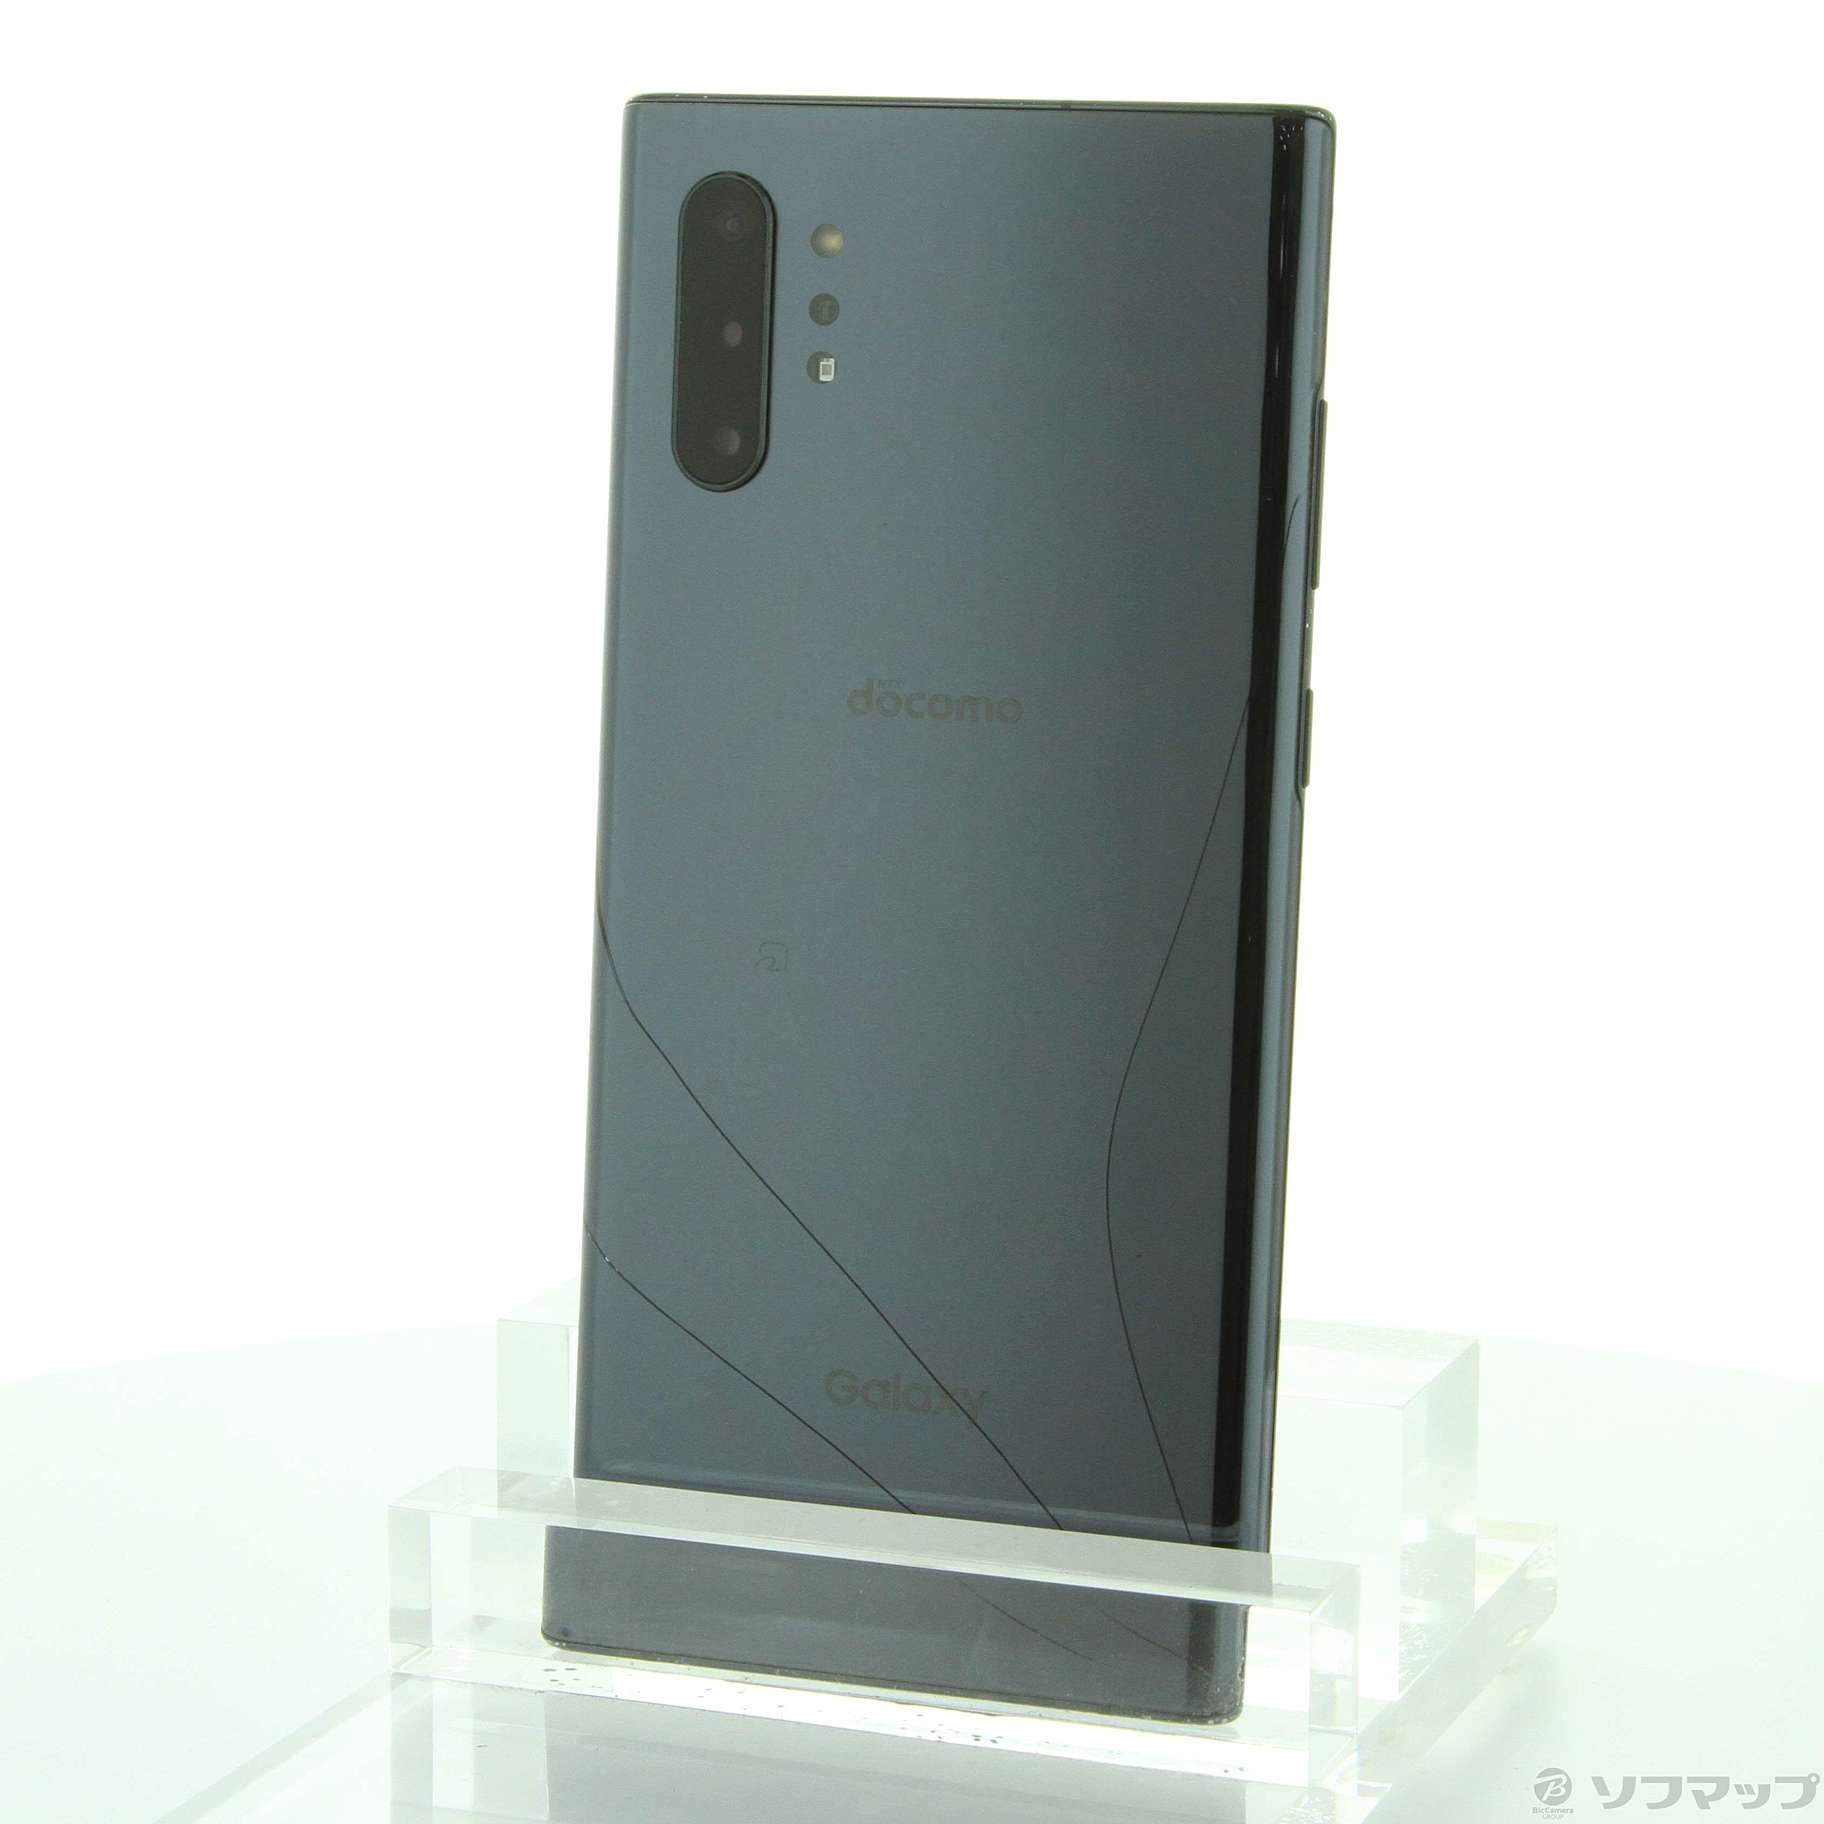 Galaxy Note10+ ブラック 256 GB docomo SC-01M